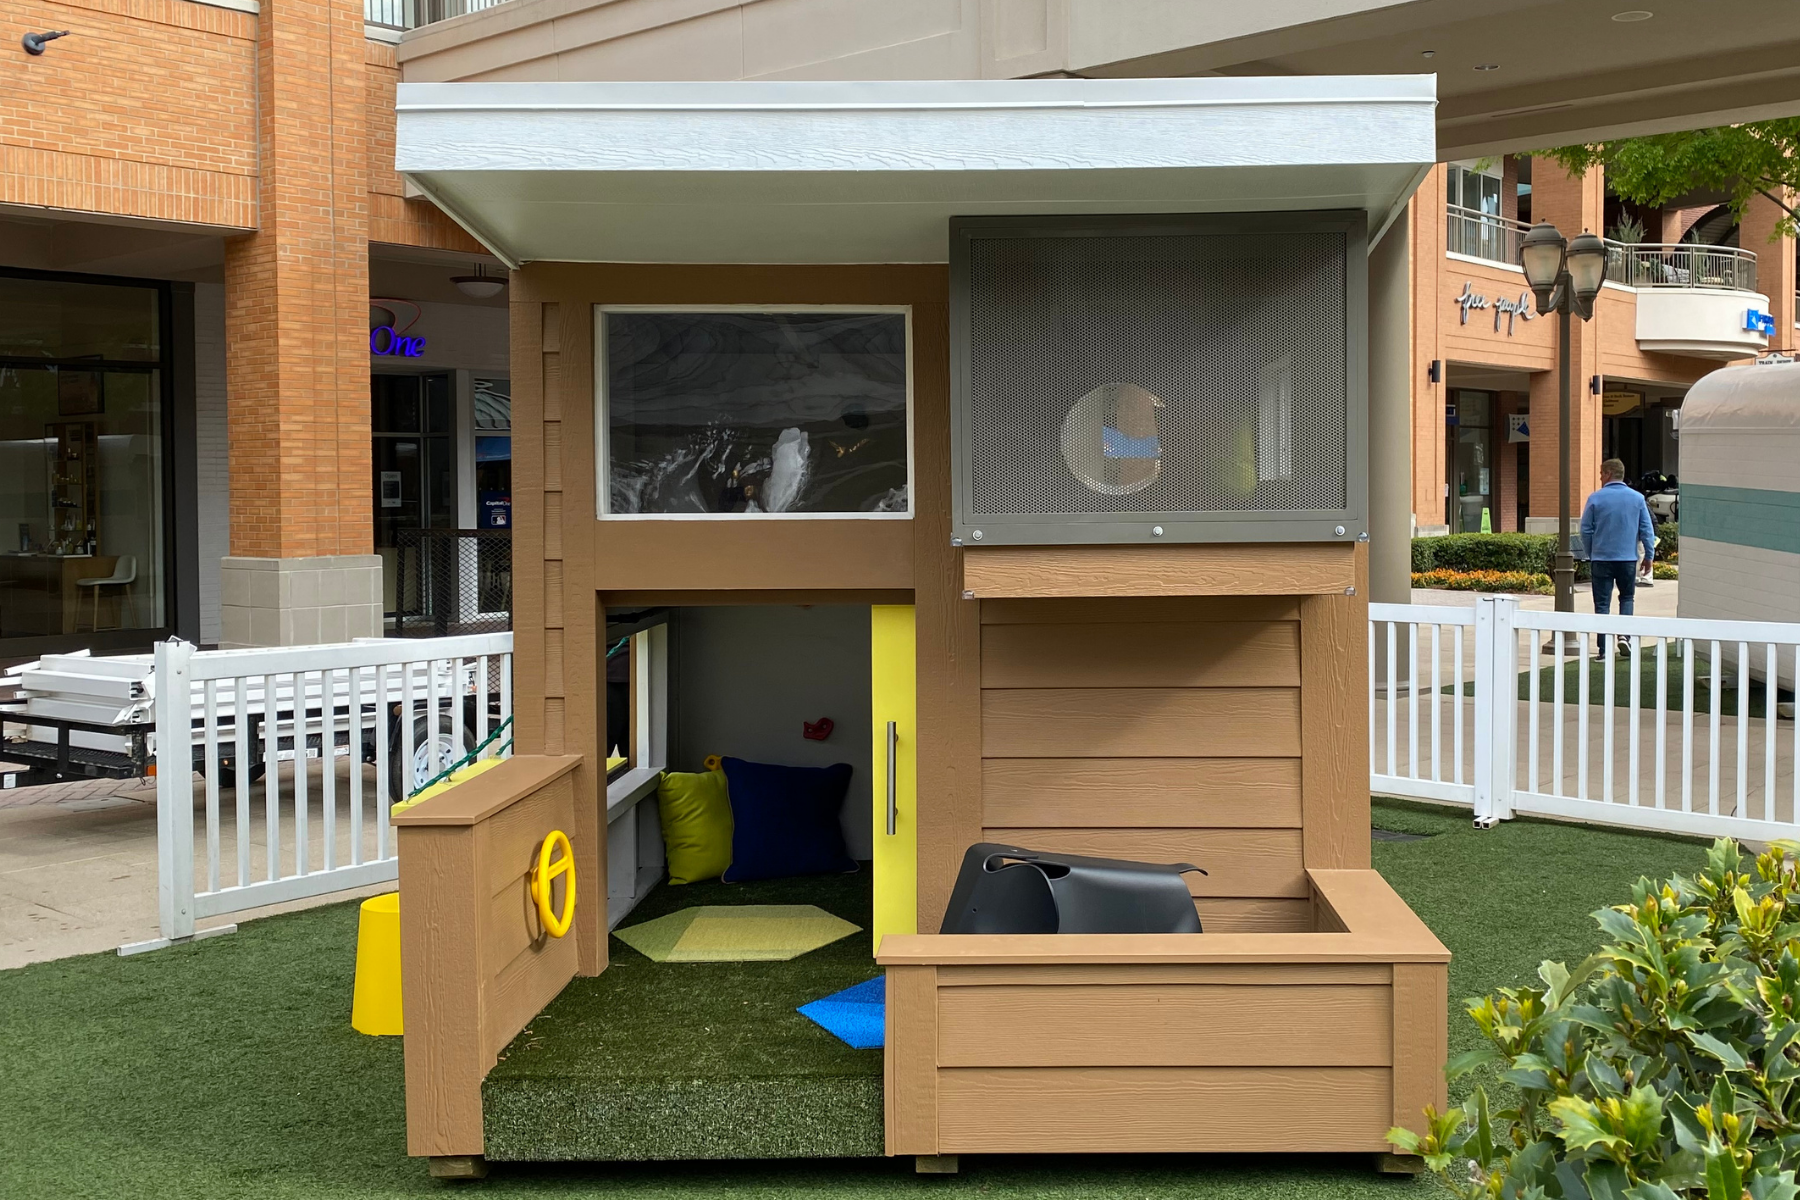 ucc playhouse on display